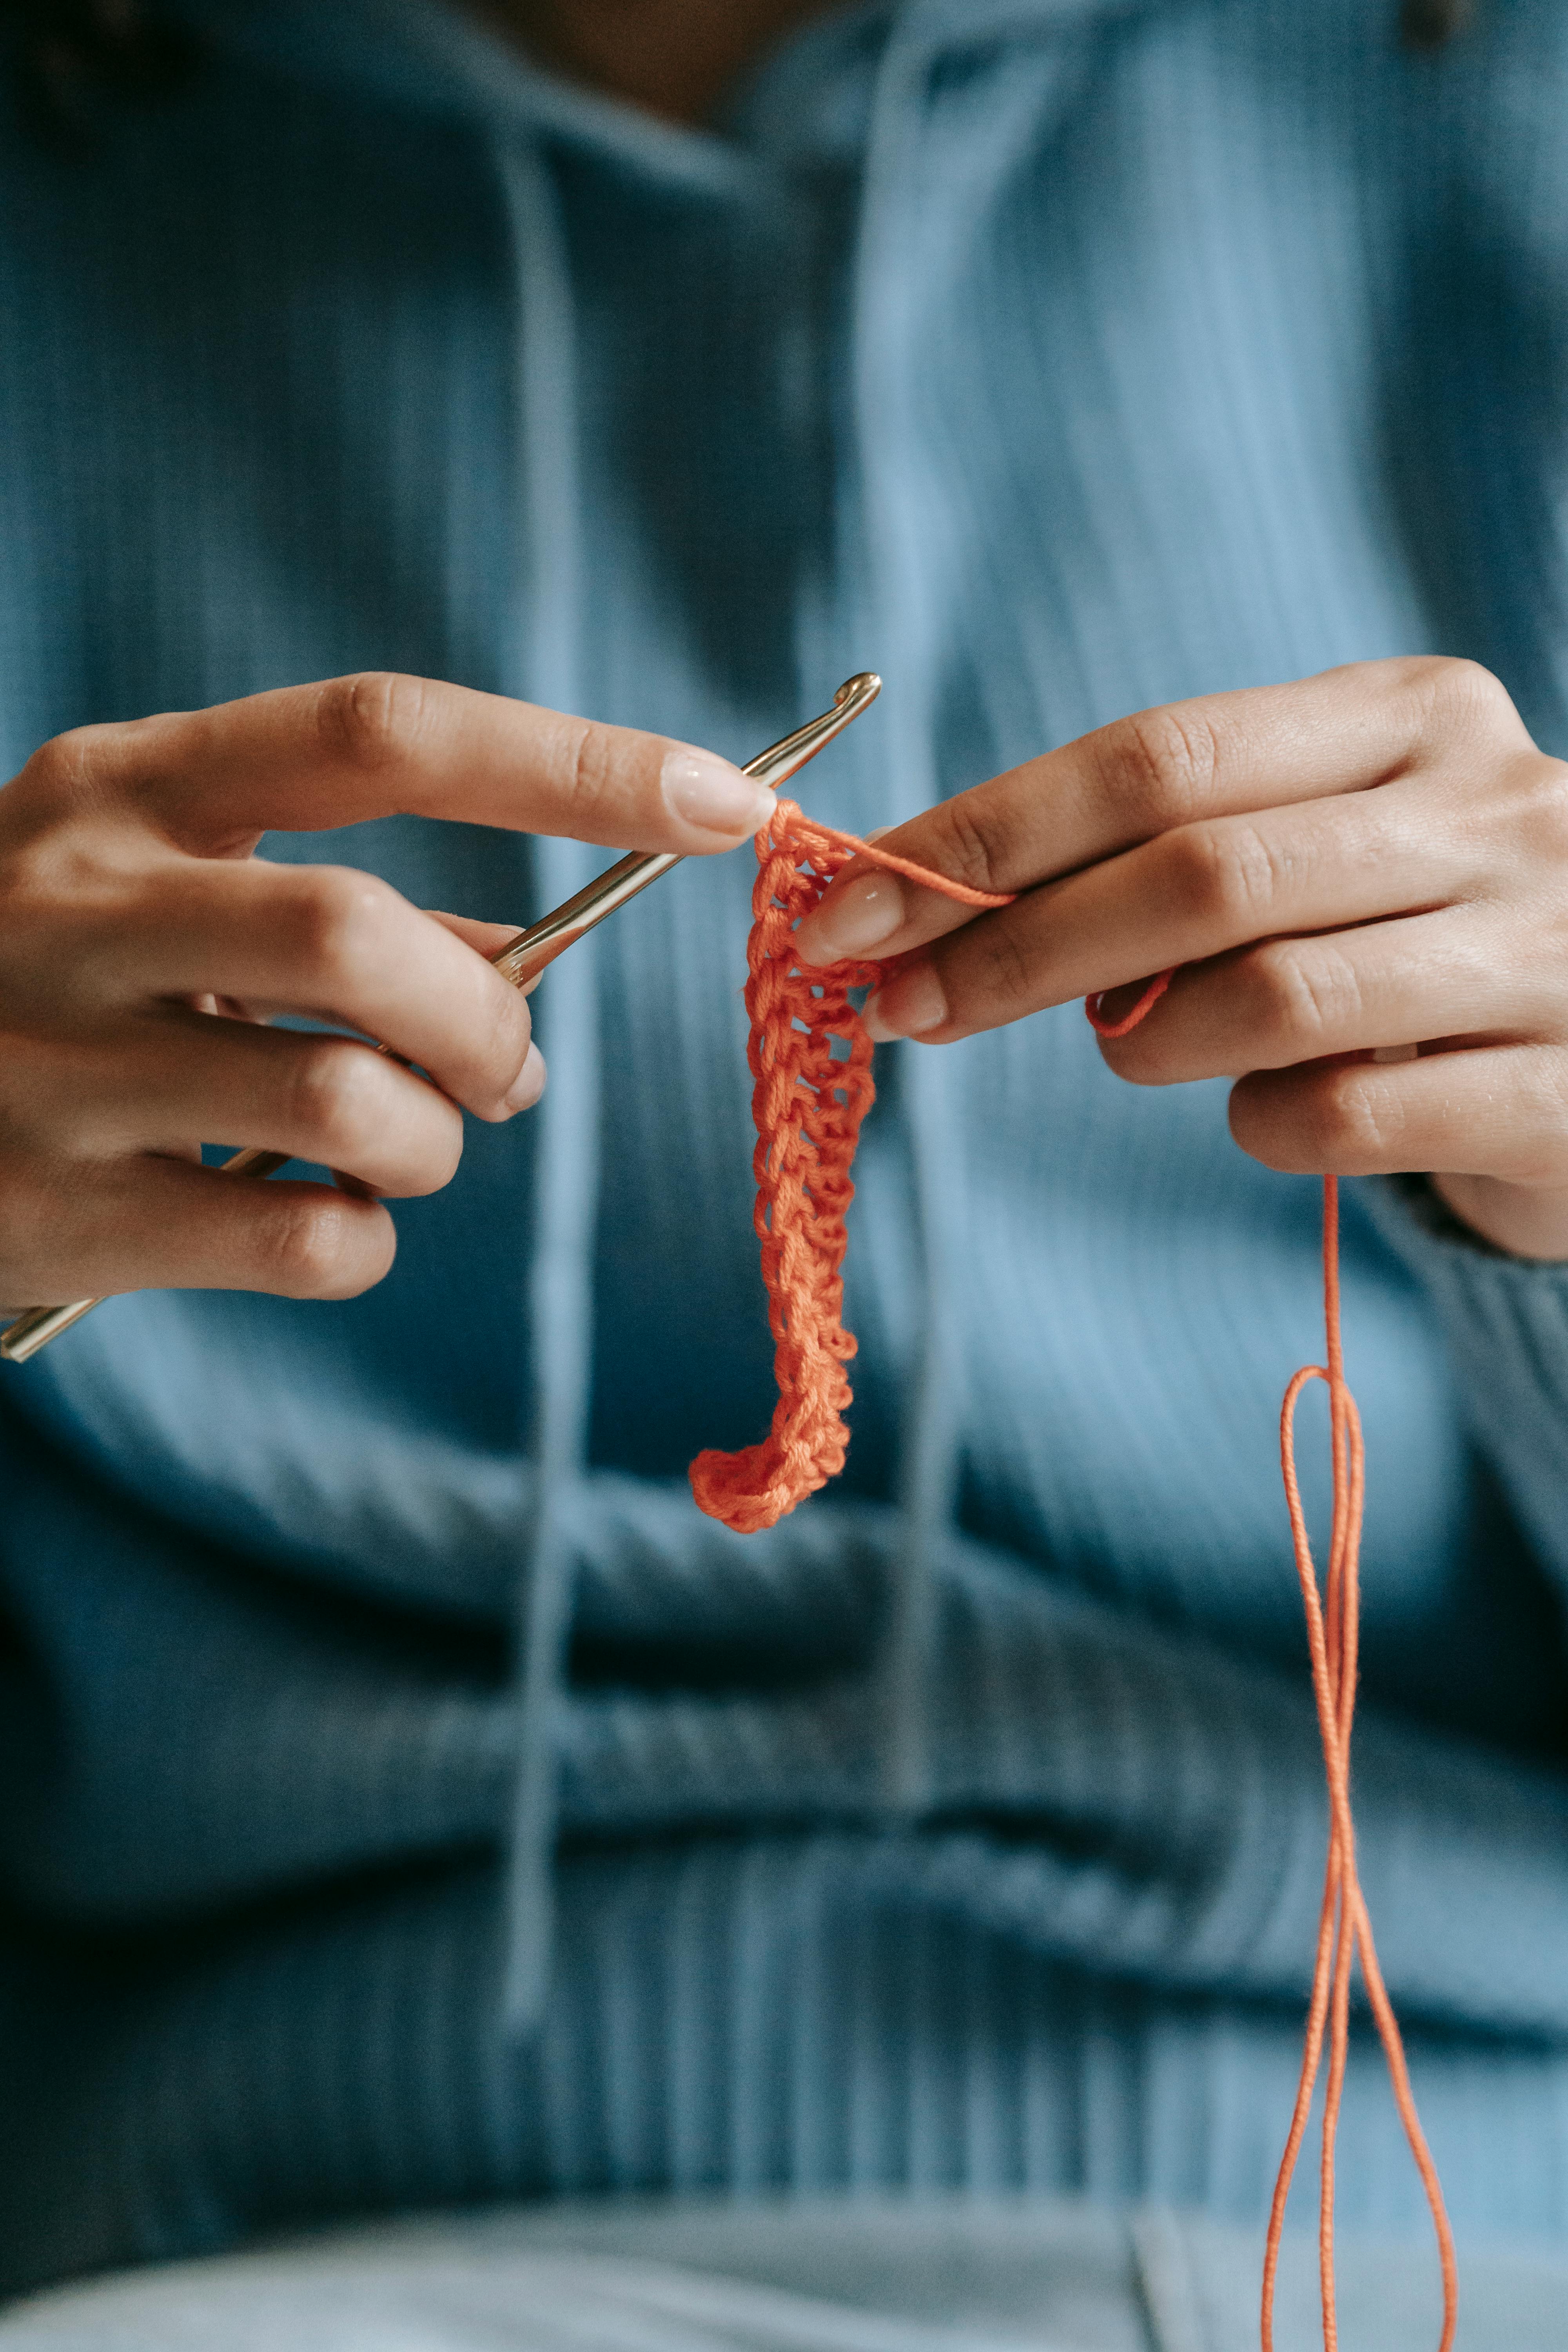 A woman knitting something | Source: Pexels